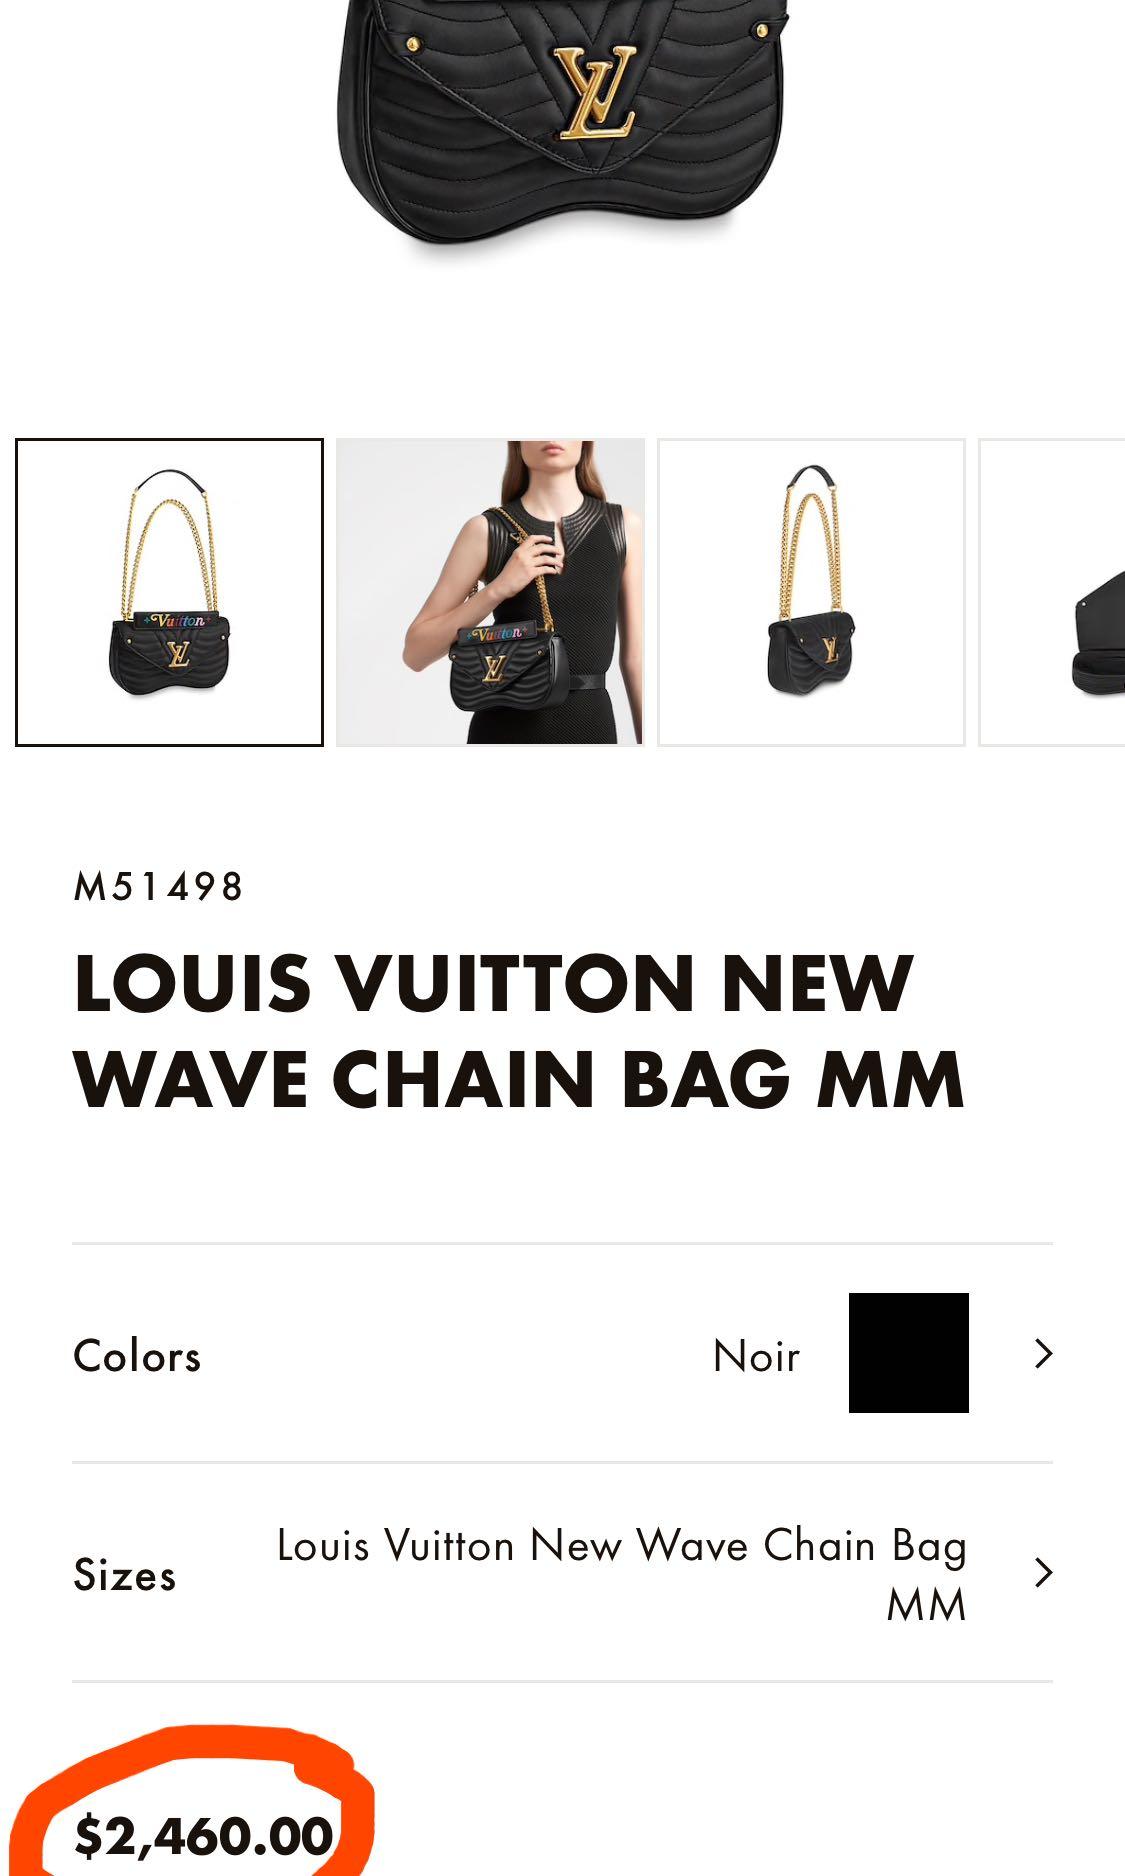 LOUIS VUITTON New Wave Chain Bag MM M51498 Shoulder Bag from Japan